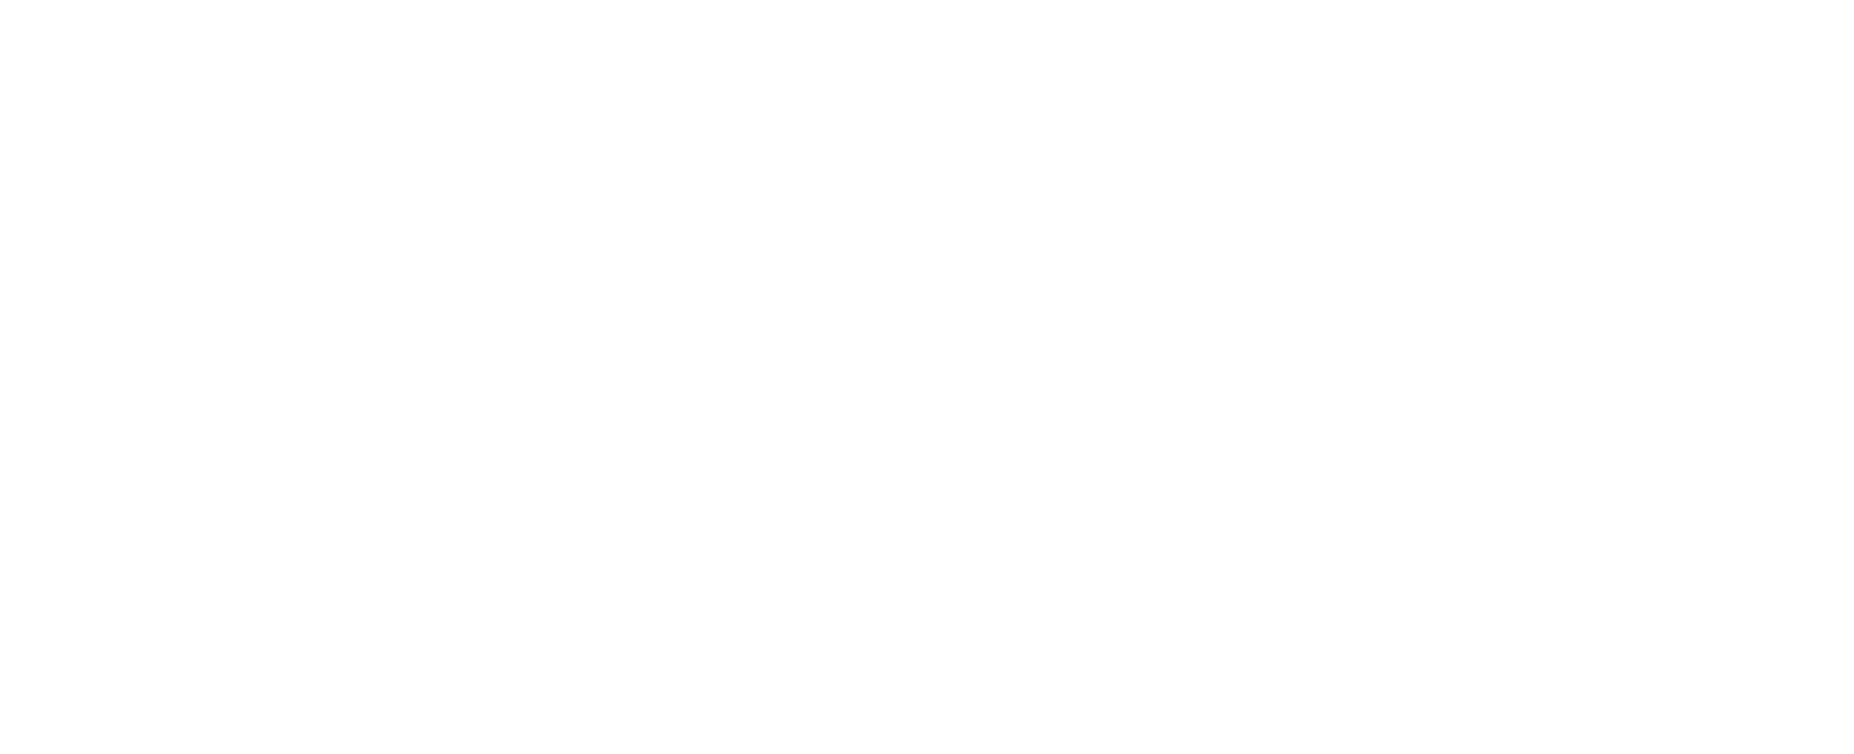 Gato - Anfitriones típicos chilenos